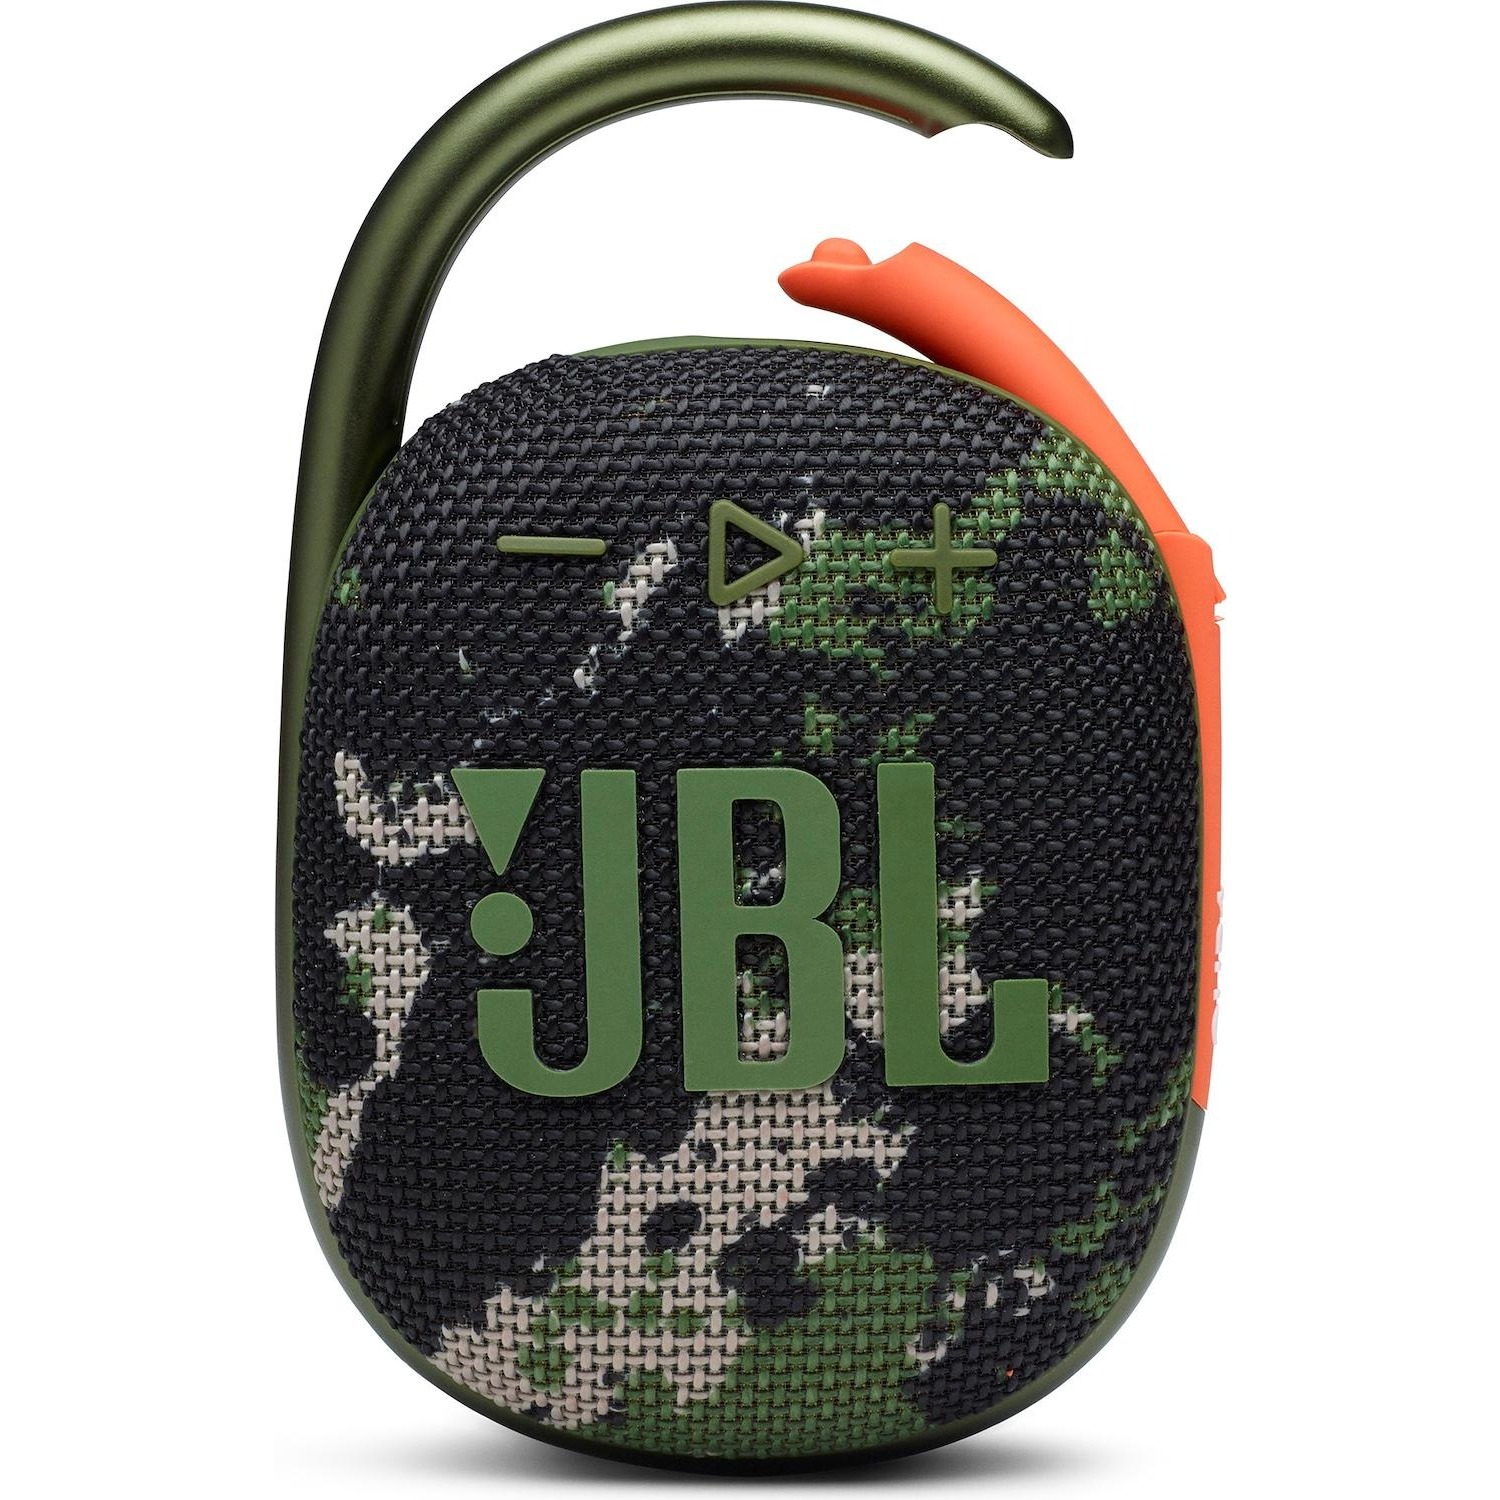 Immagine per Speaker bluetooth JBL CLIP 4 colore camouflage da DIMOStore